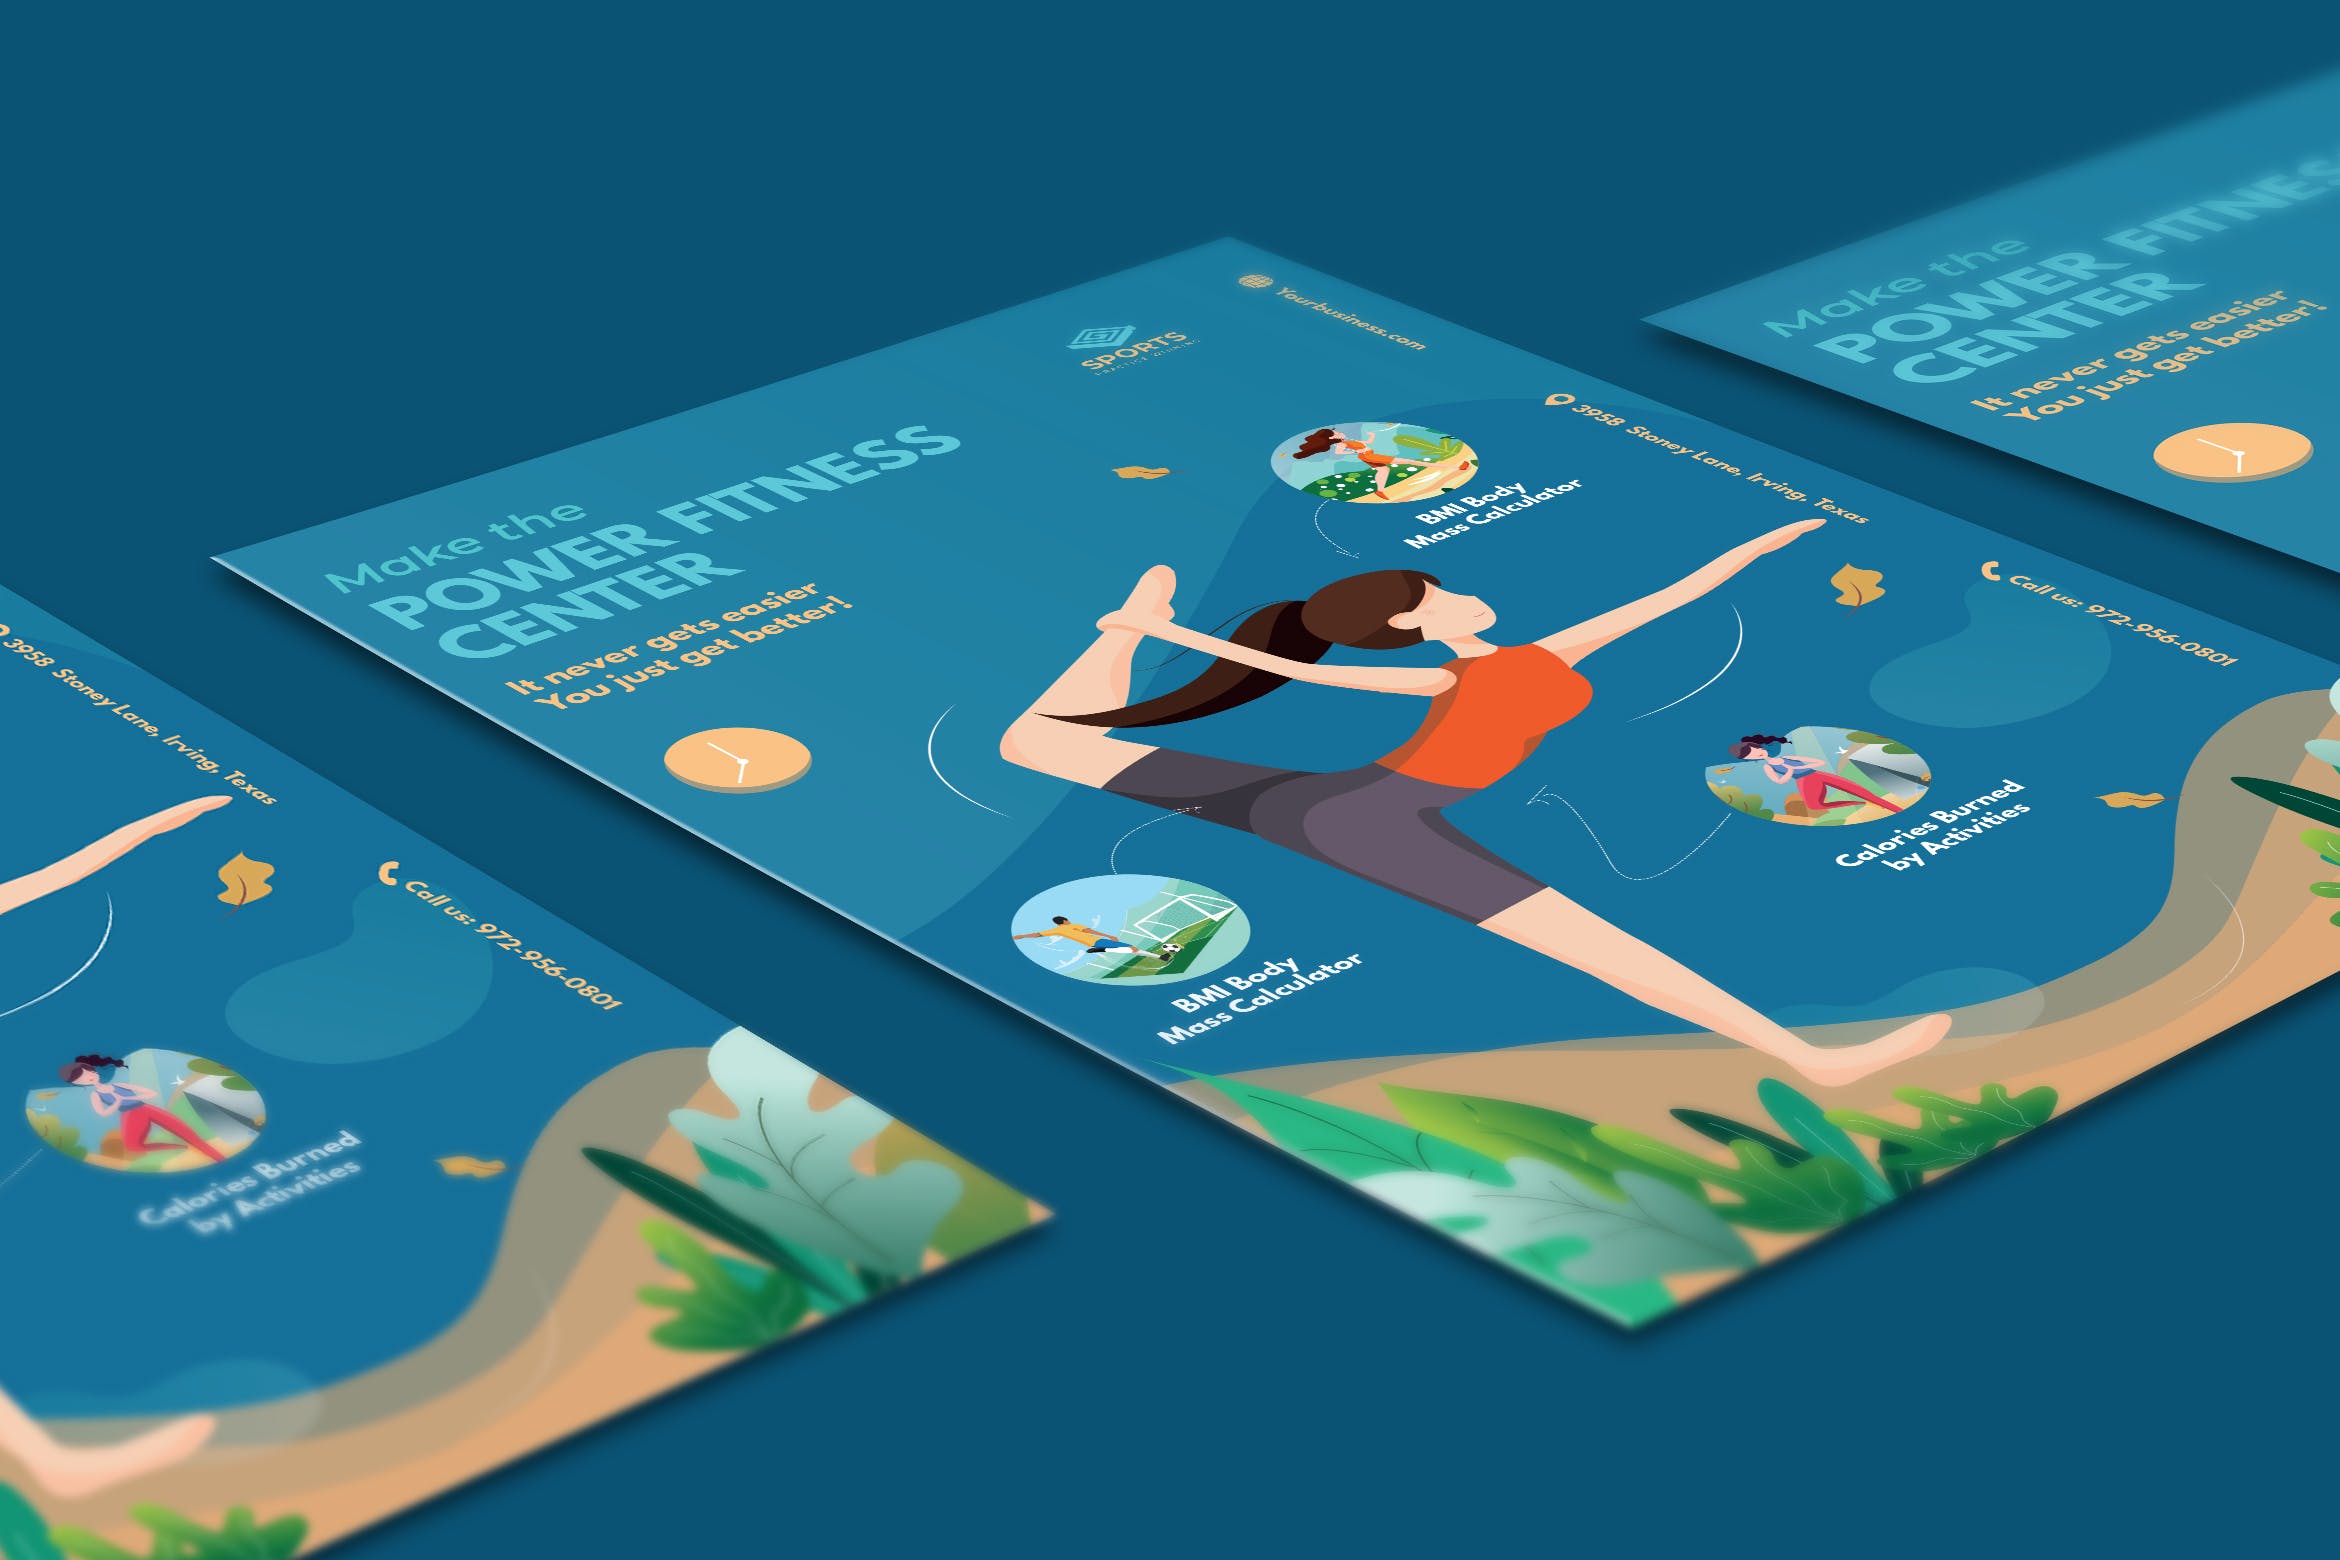 体育活动主题插画传单设计模板 Sport Activities Flyer Illustration Template插图